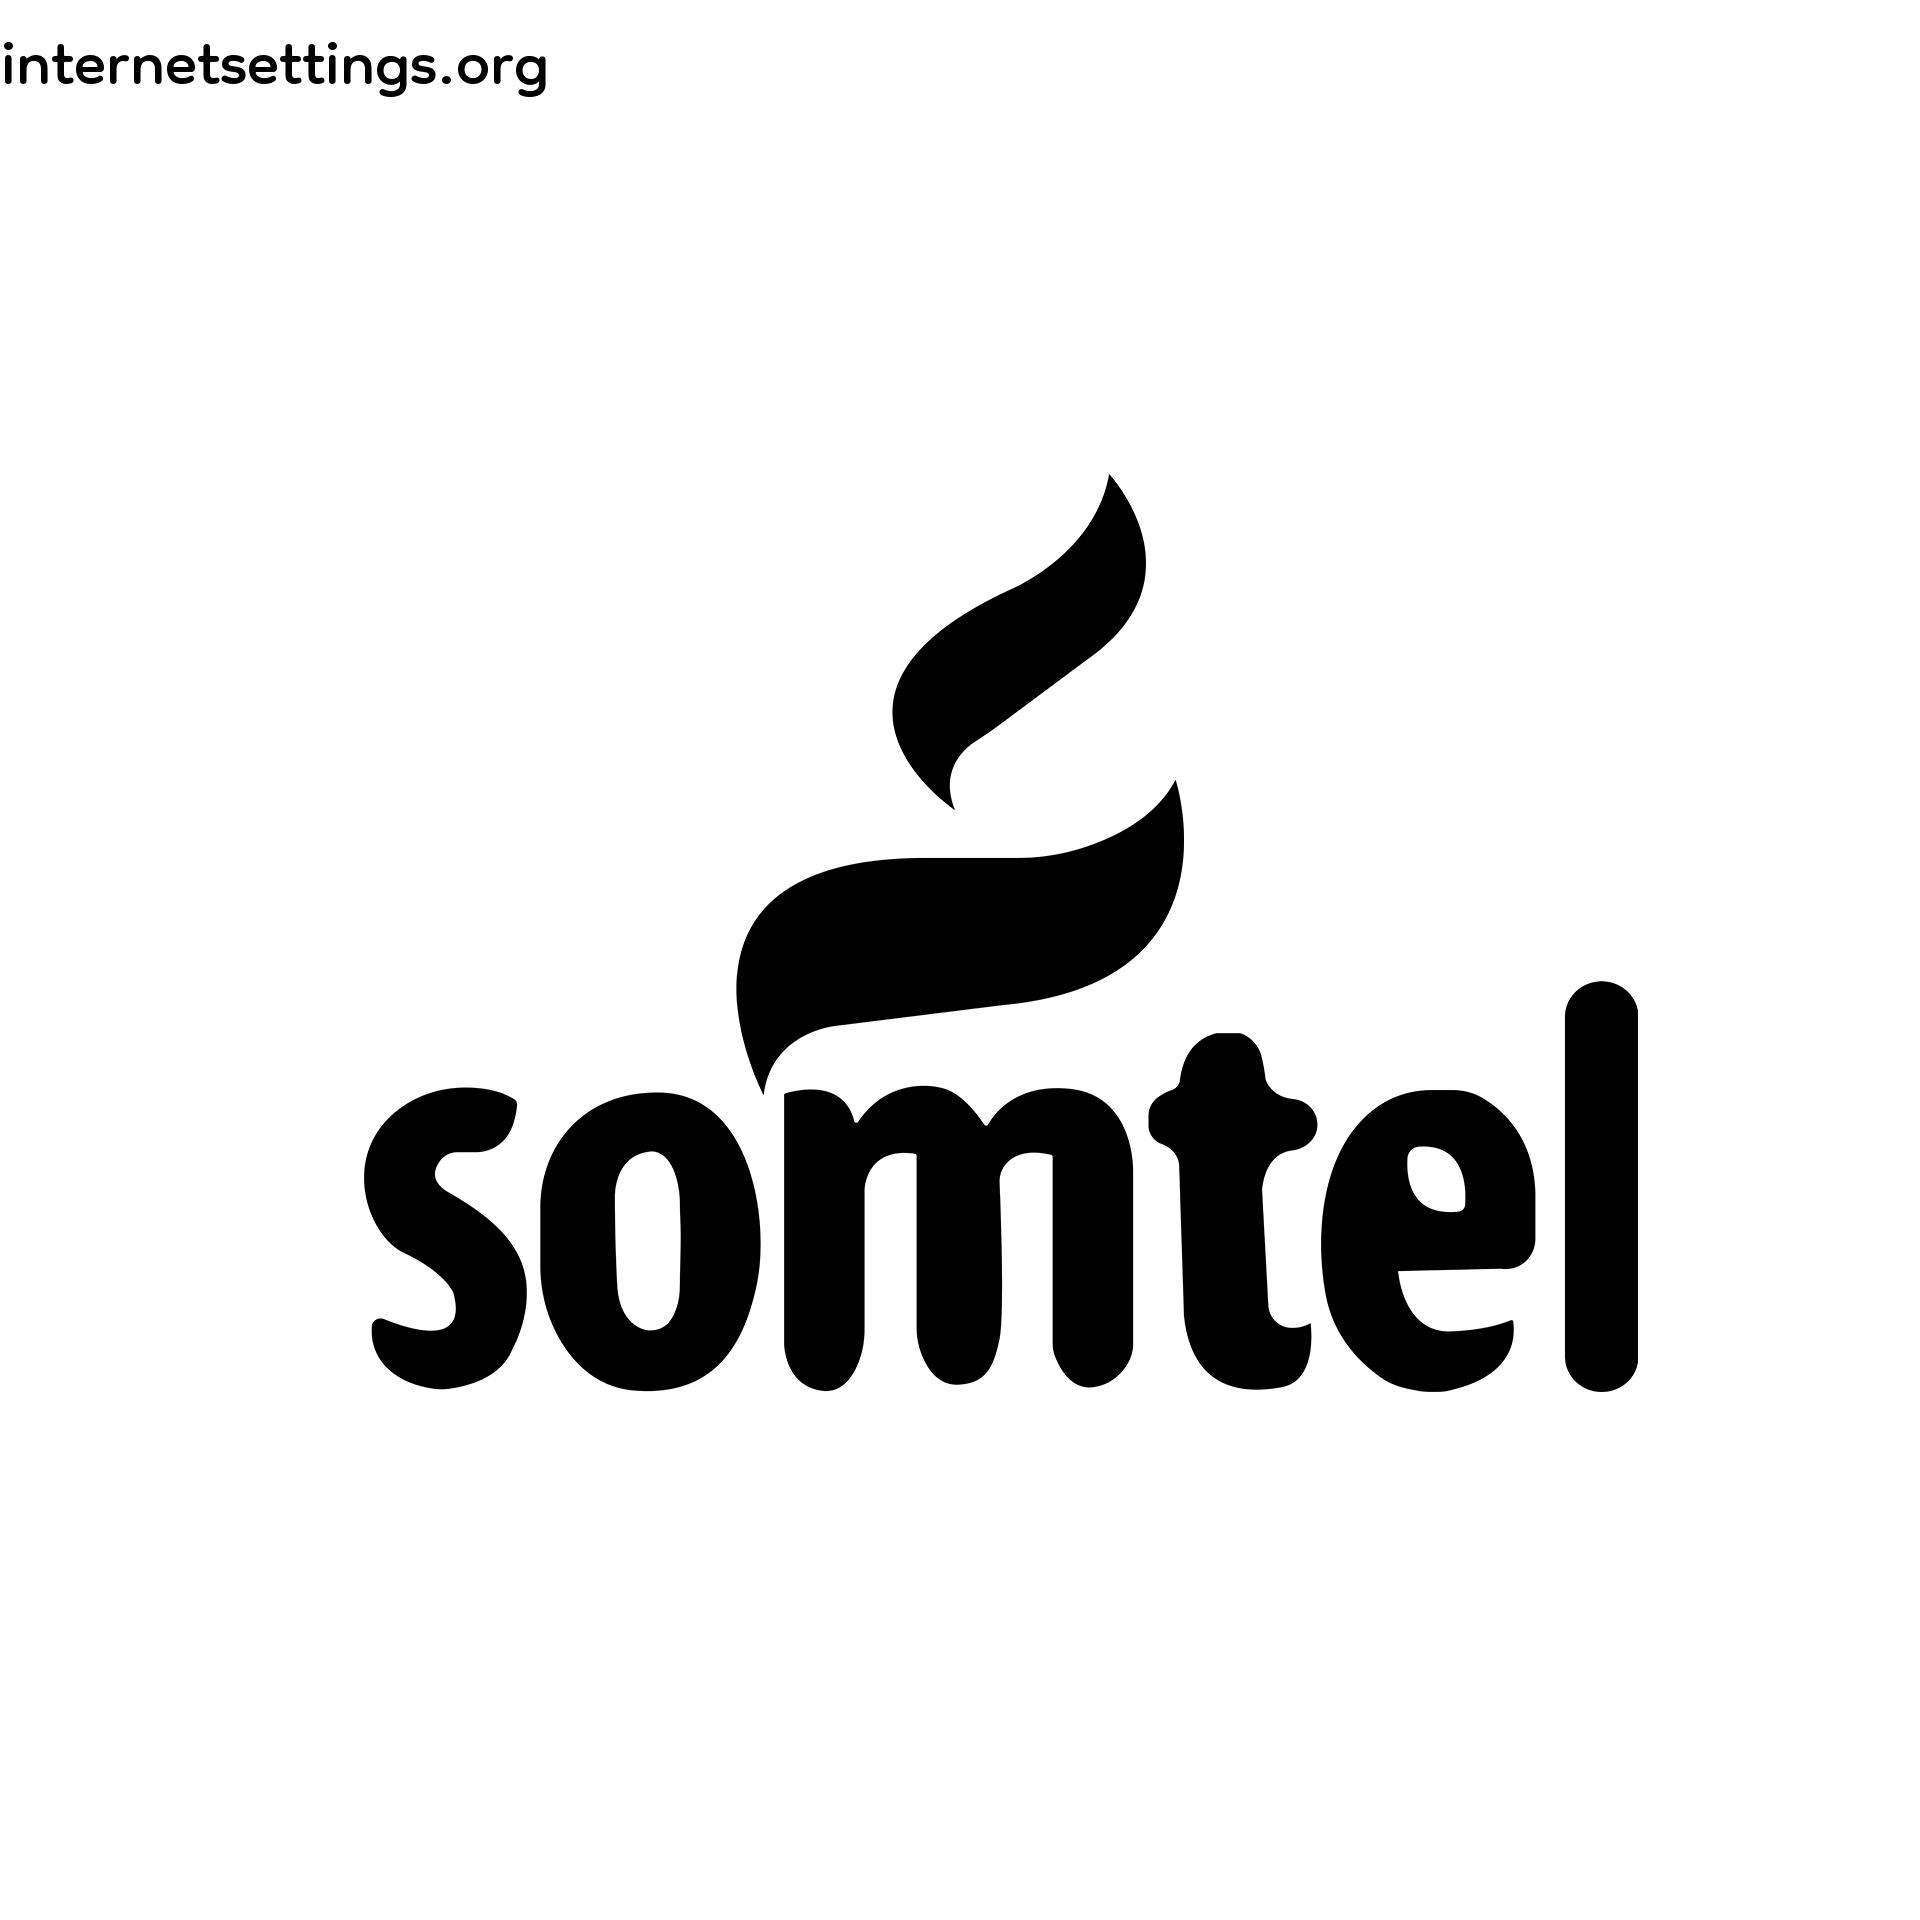 Somtel